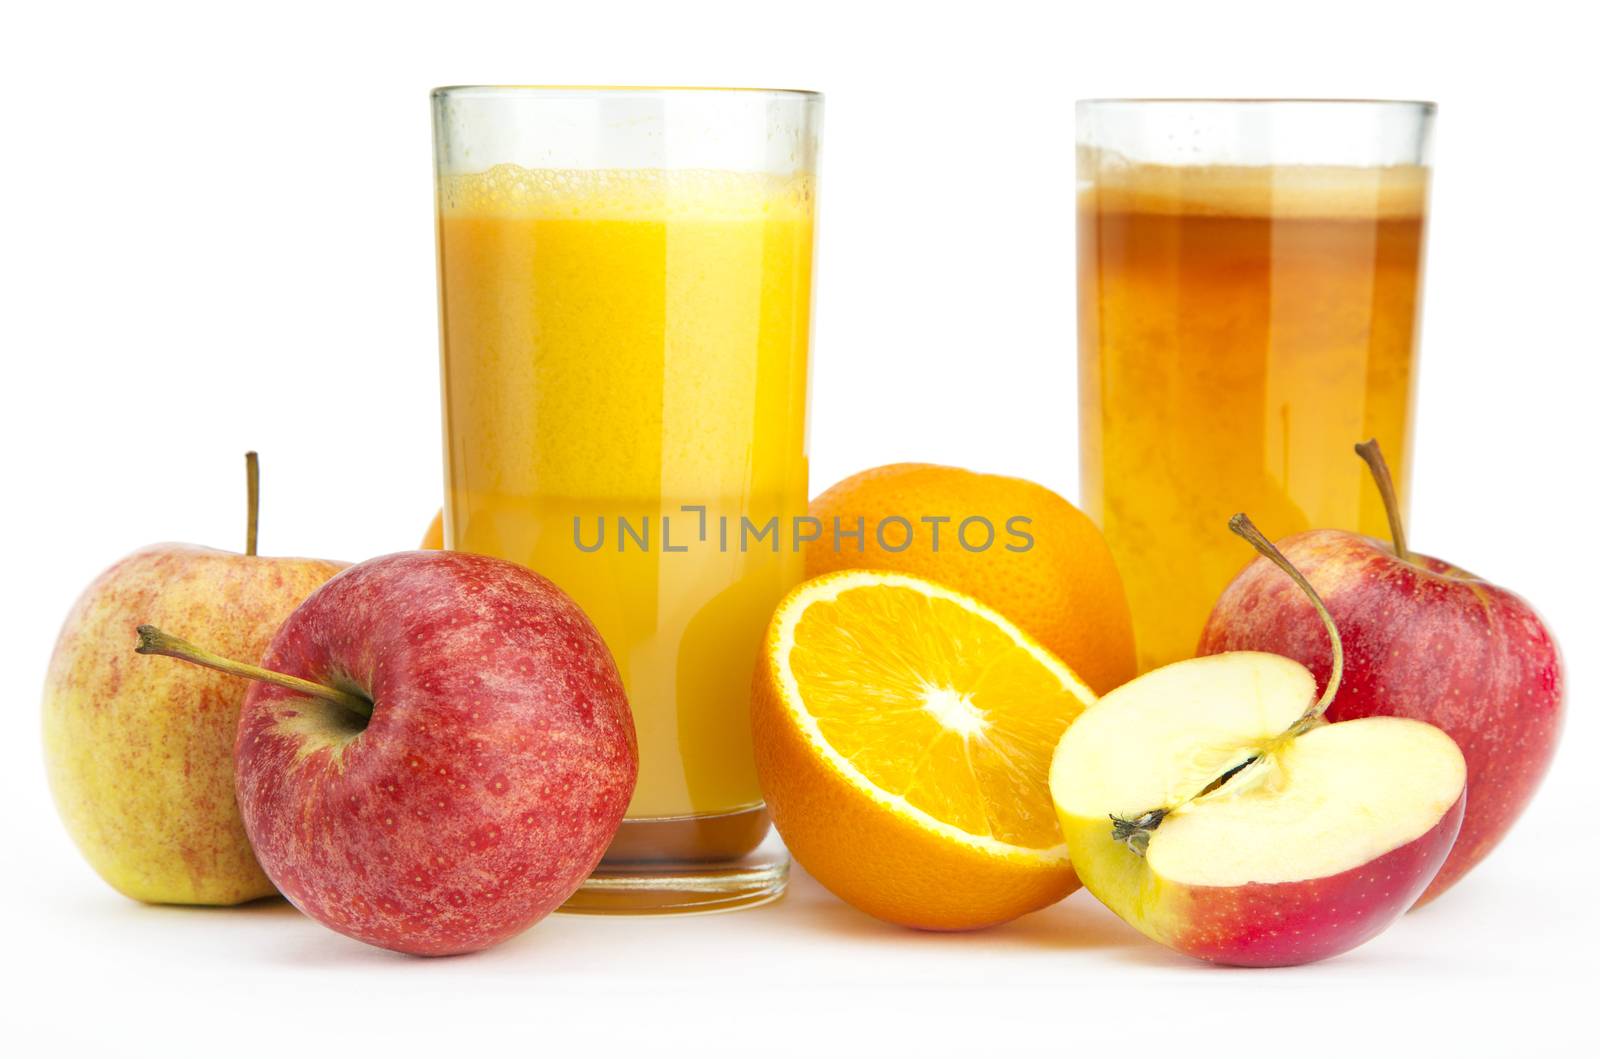 Orange juice and apple juice against a white background